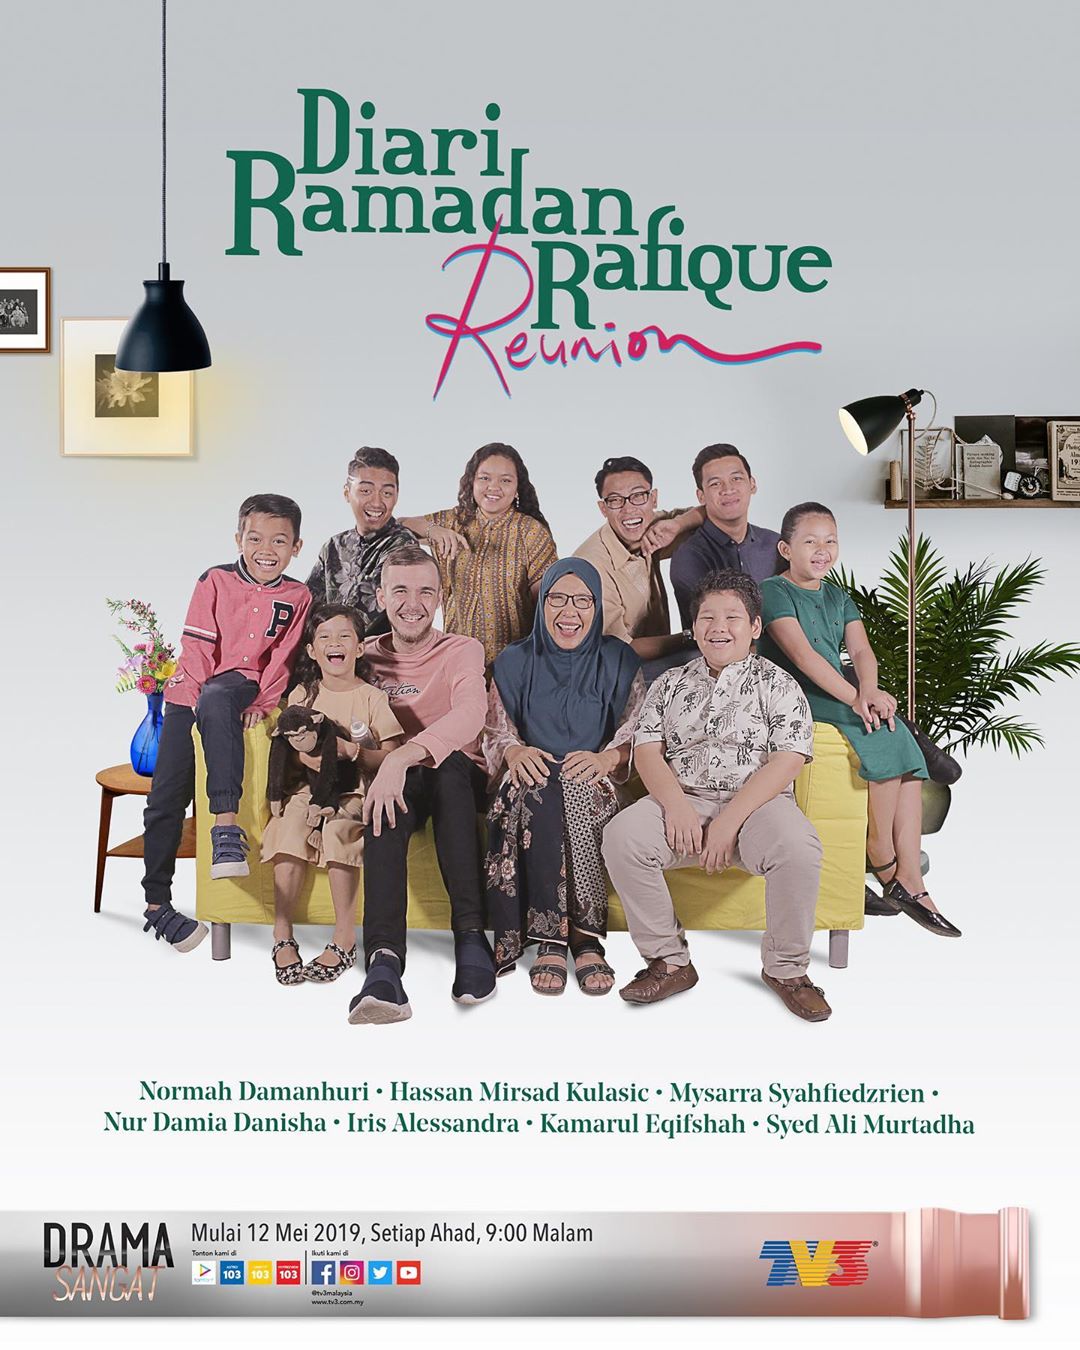 Diari Ramadan Rafique Reunion